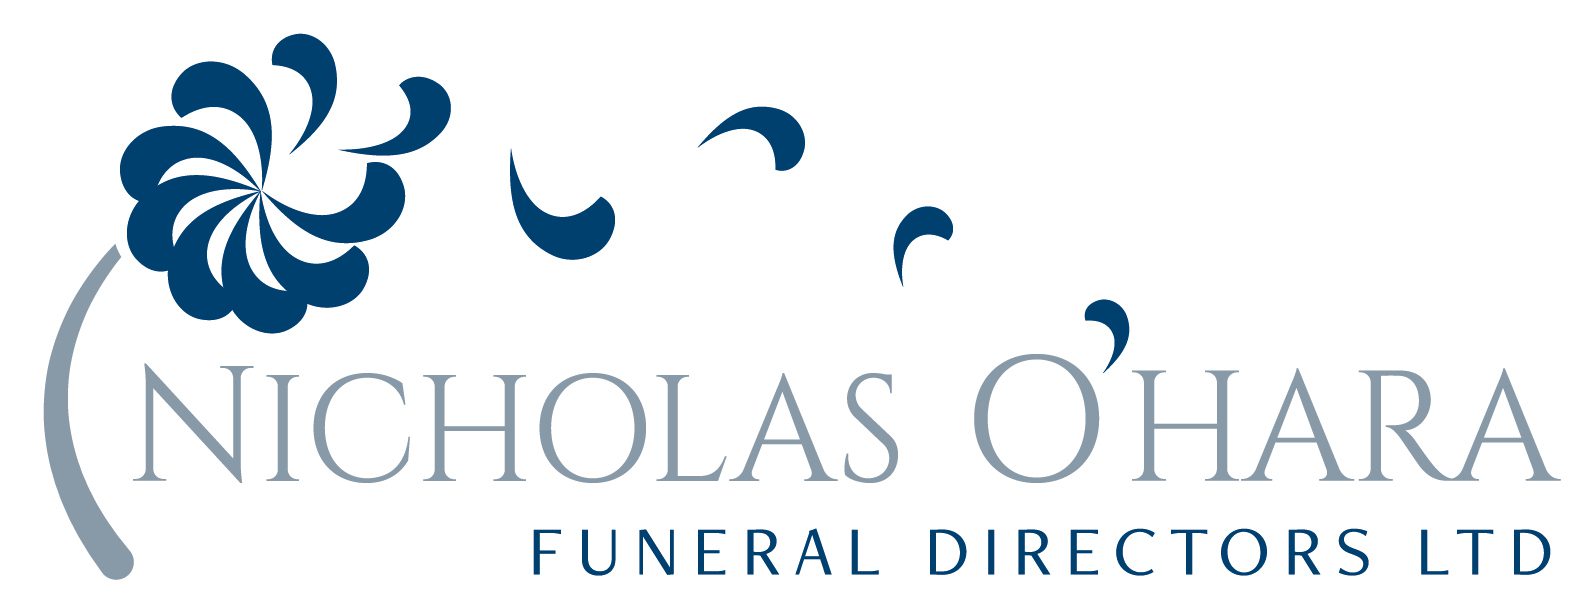 Nicholas O’Hara Funeral Directors Ltd